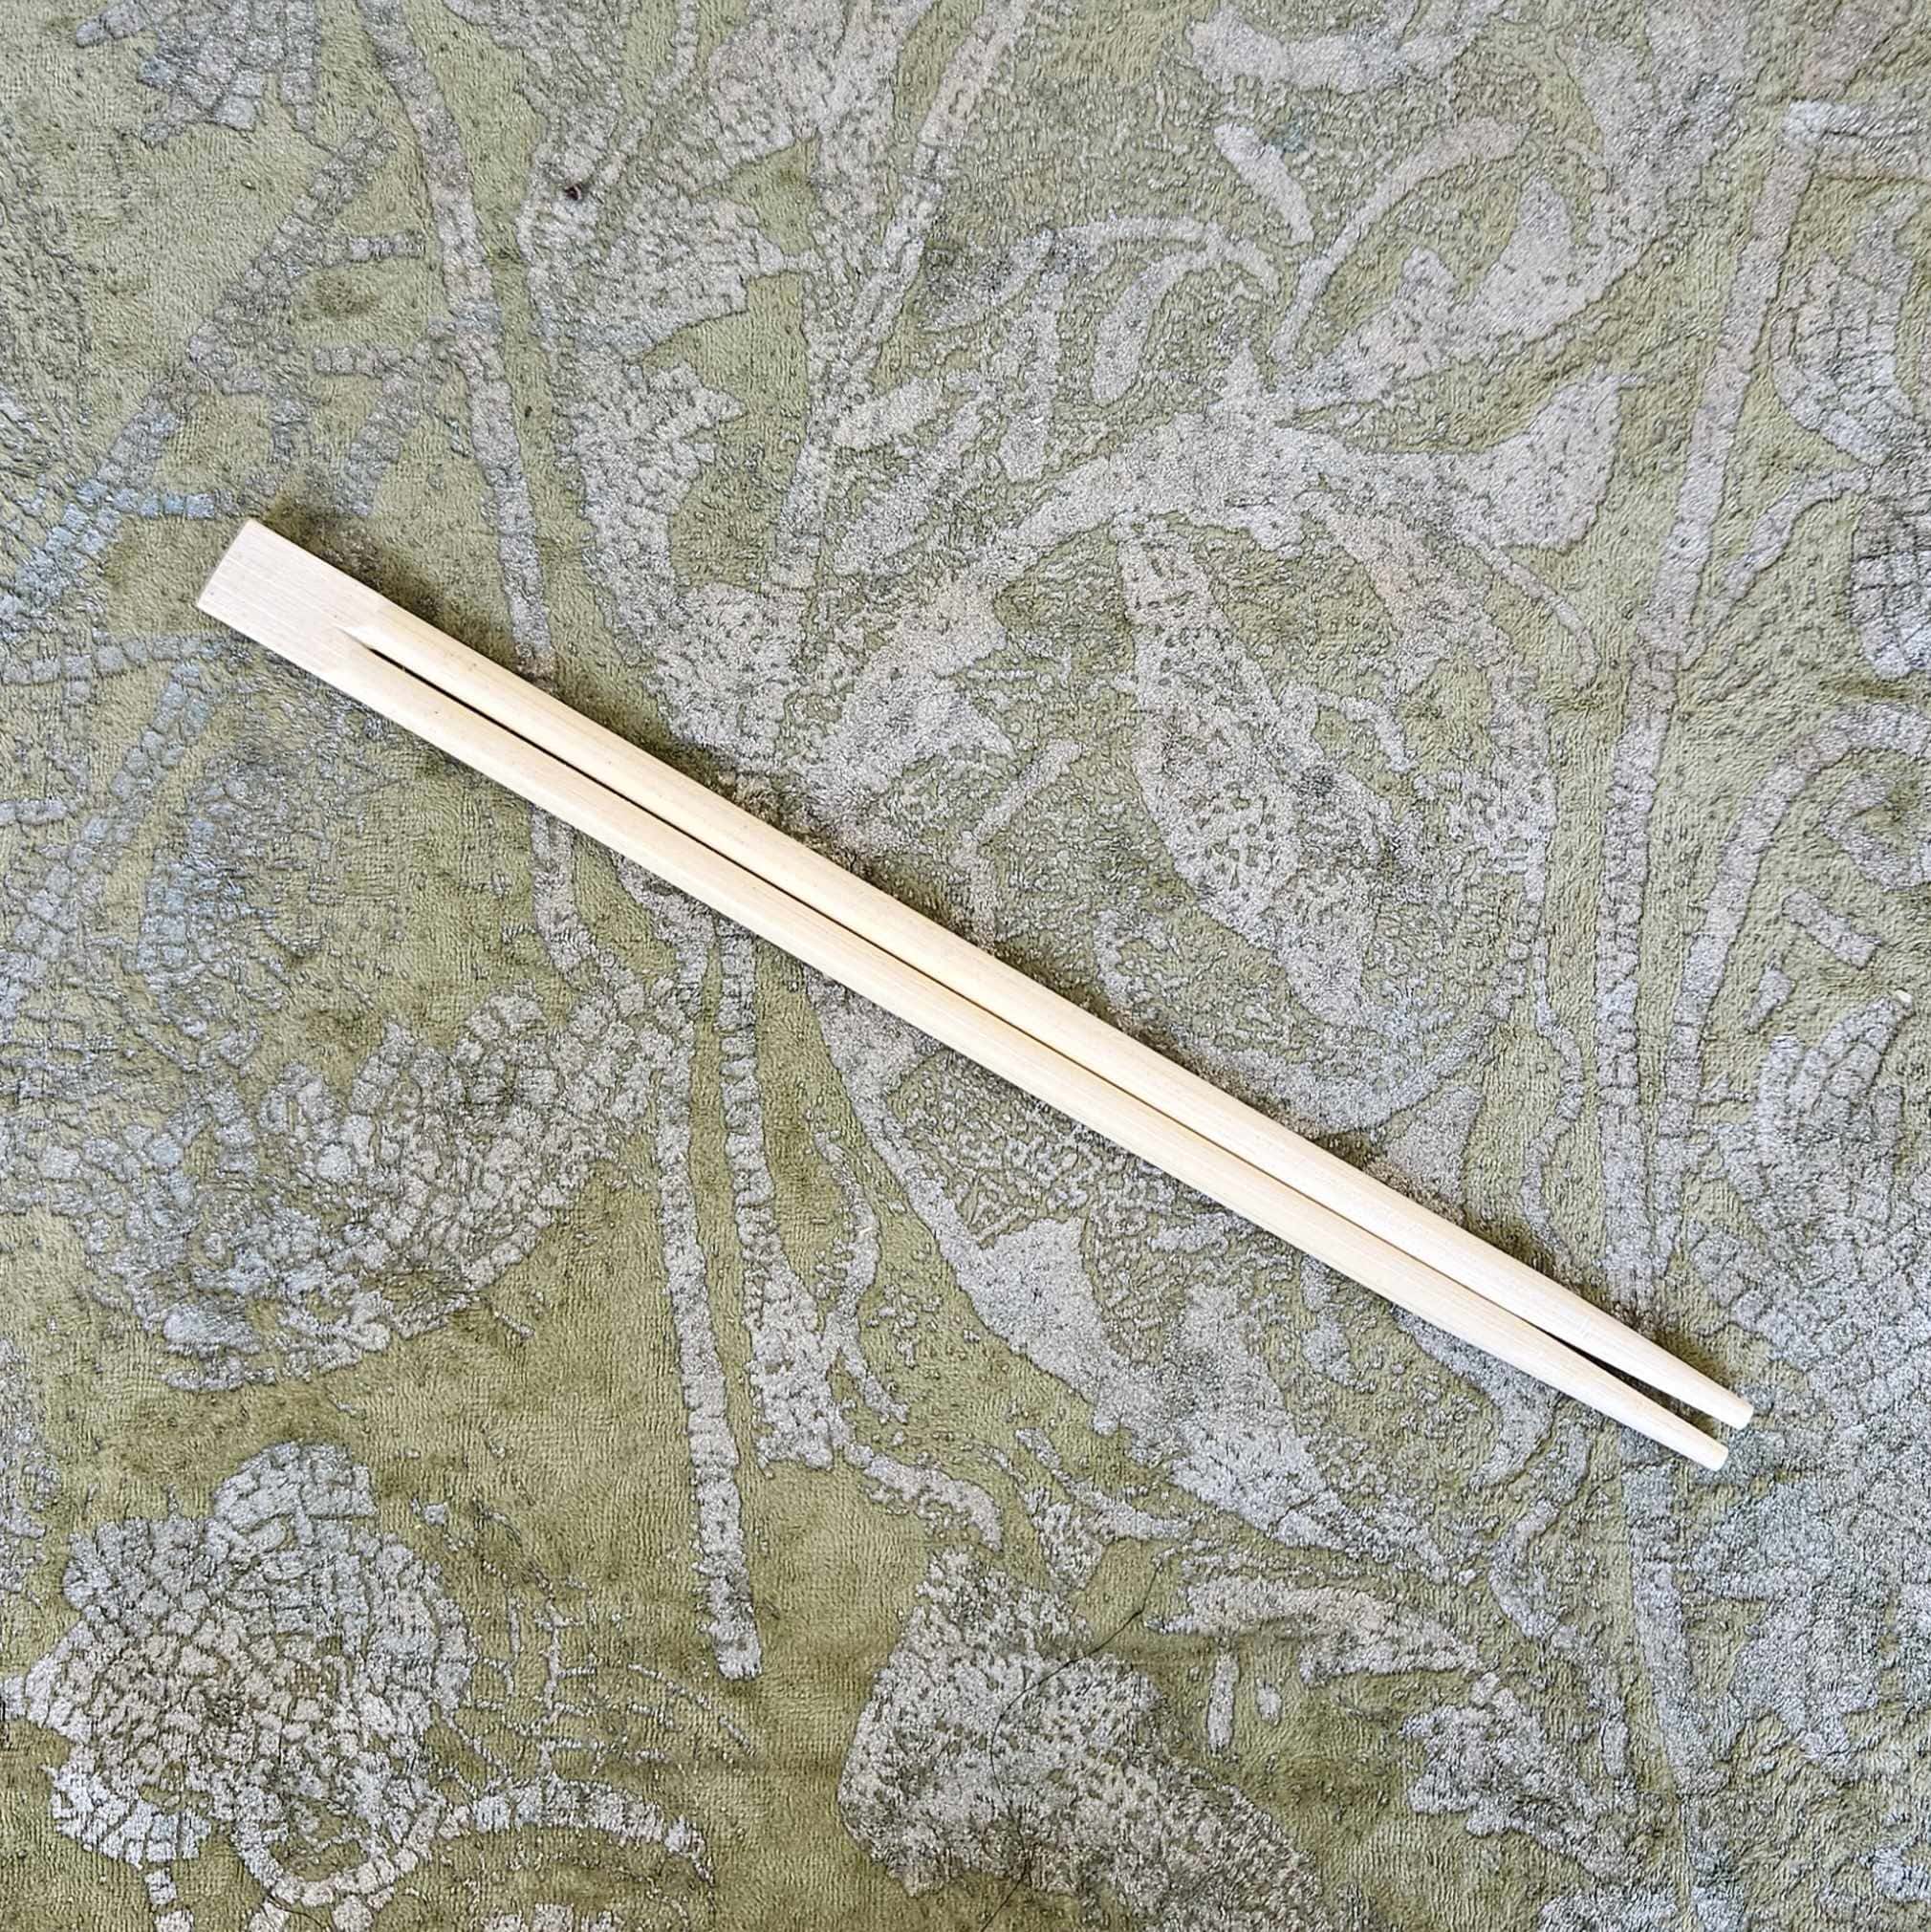 Photo of chopsticks